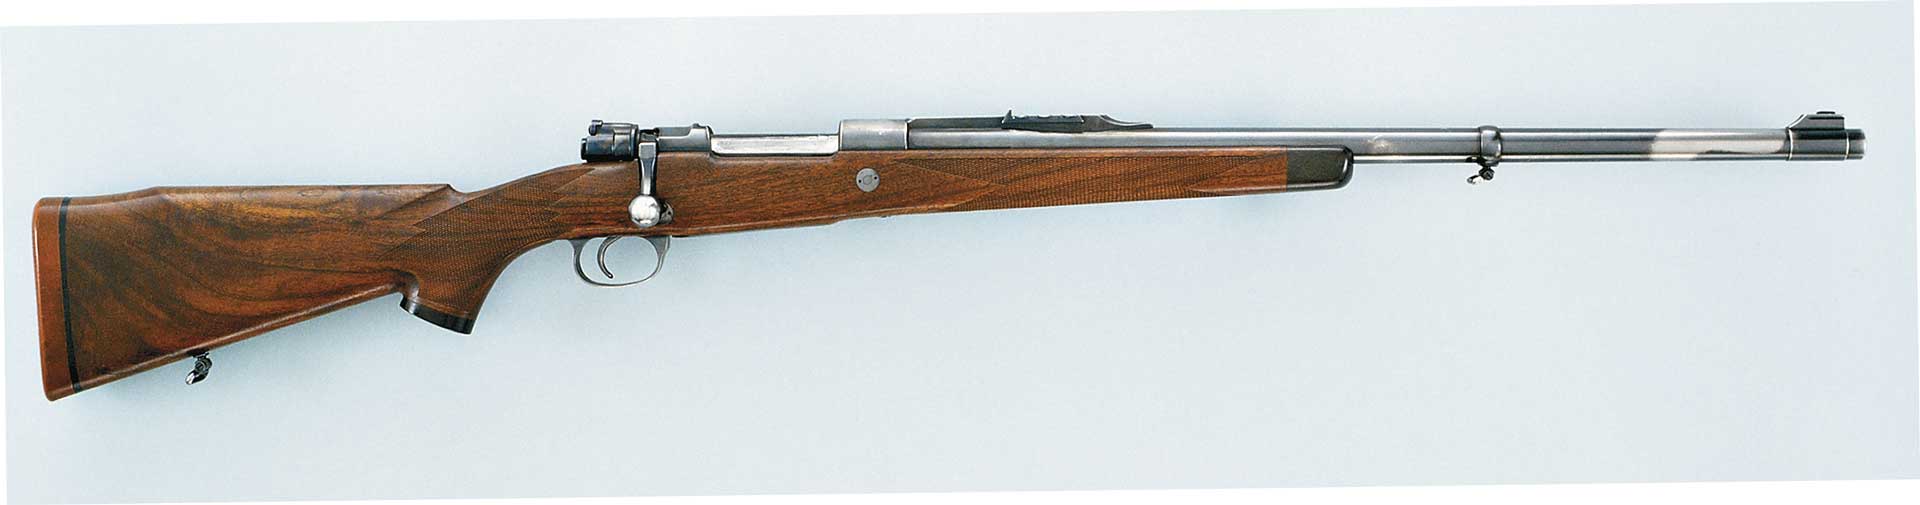 rifle gun wood stock bolt action